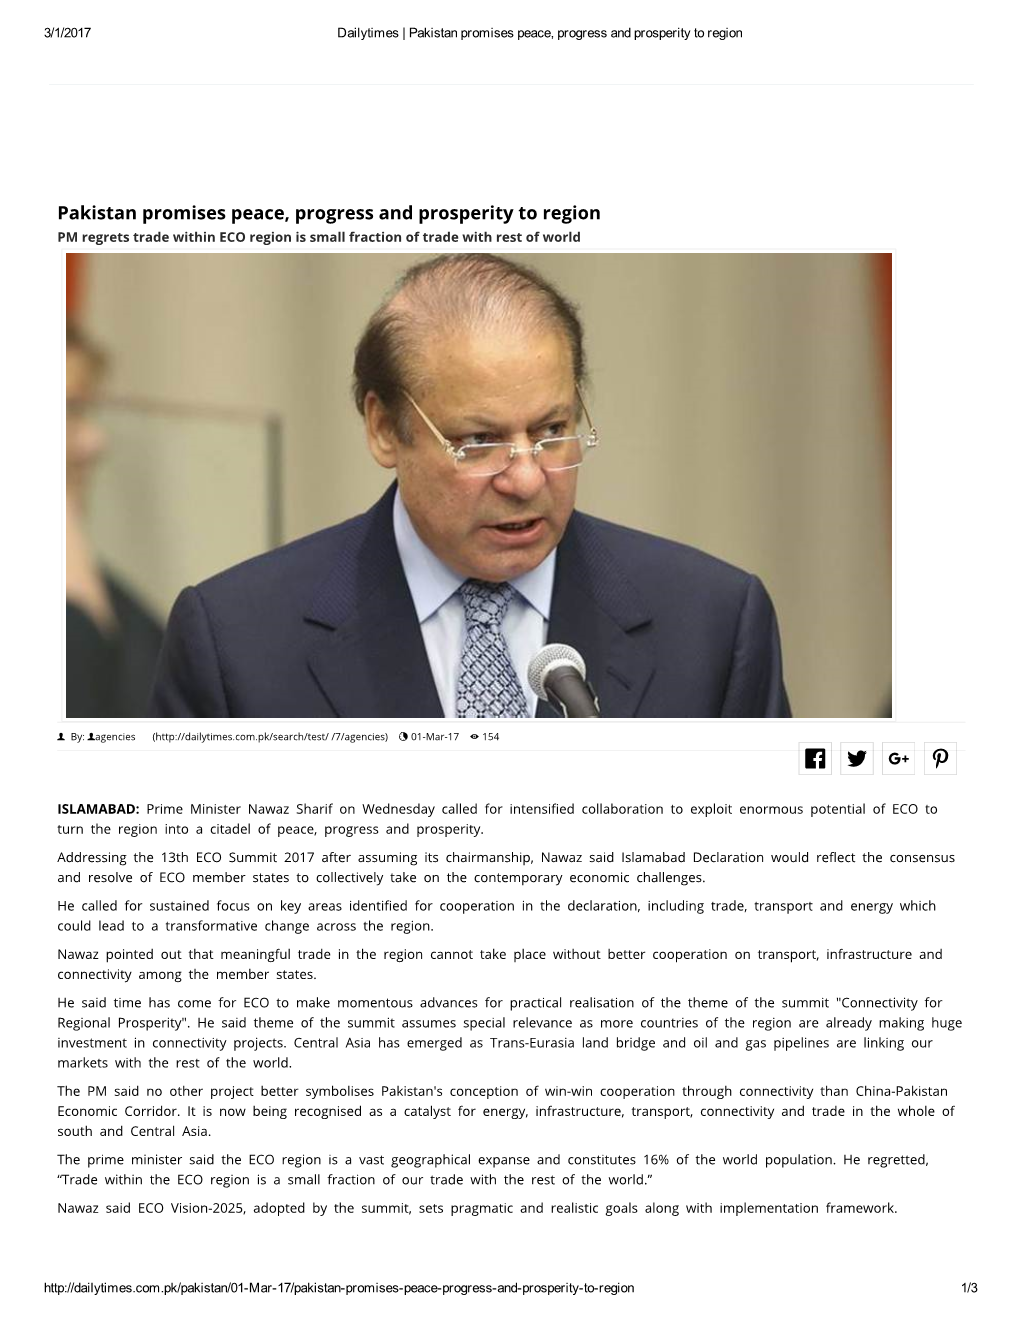 Dailytimes | Pakistan Promises Peace, Progress and Prosperity to Region